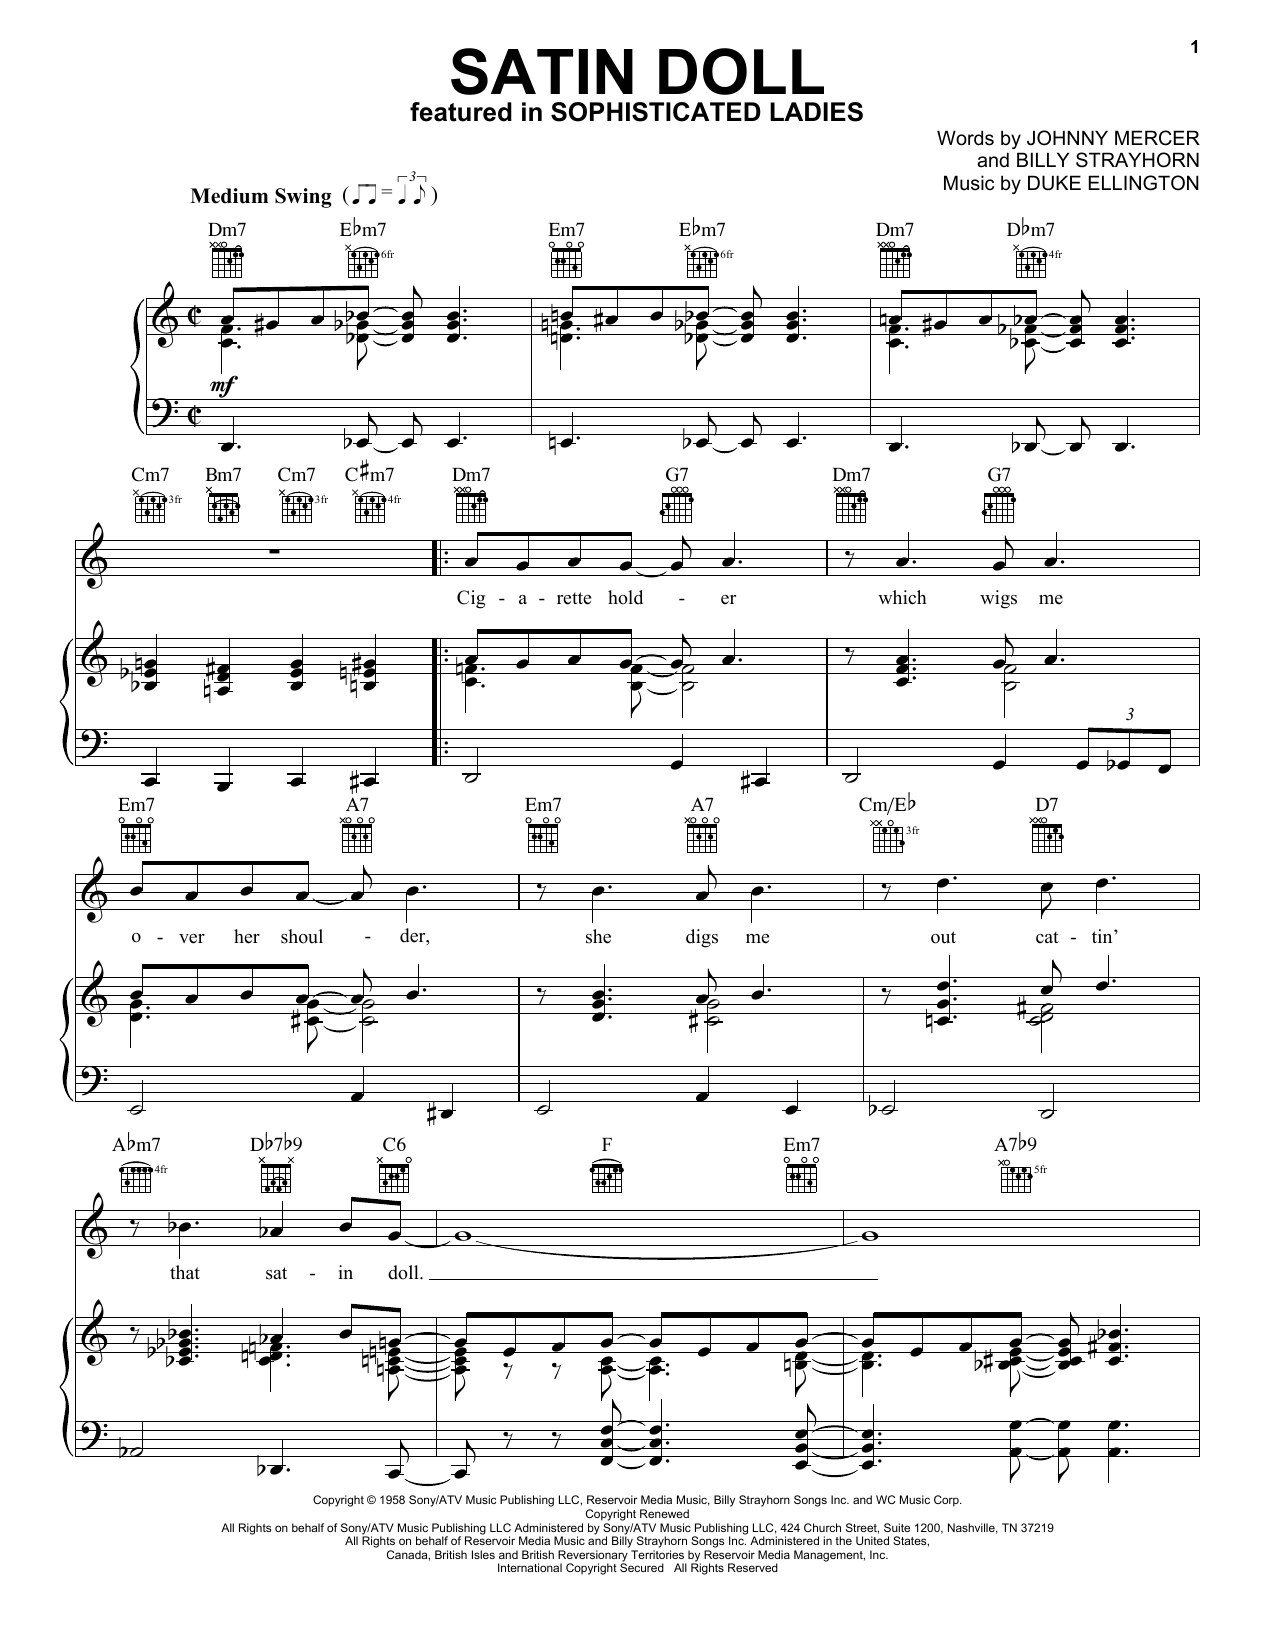 Duke Ellington Satin Doll Sheet Music Notes & Chords for Alto Saxophone - Download or Print PDF